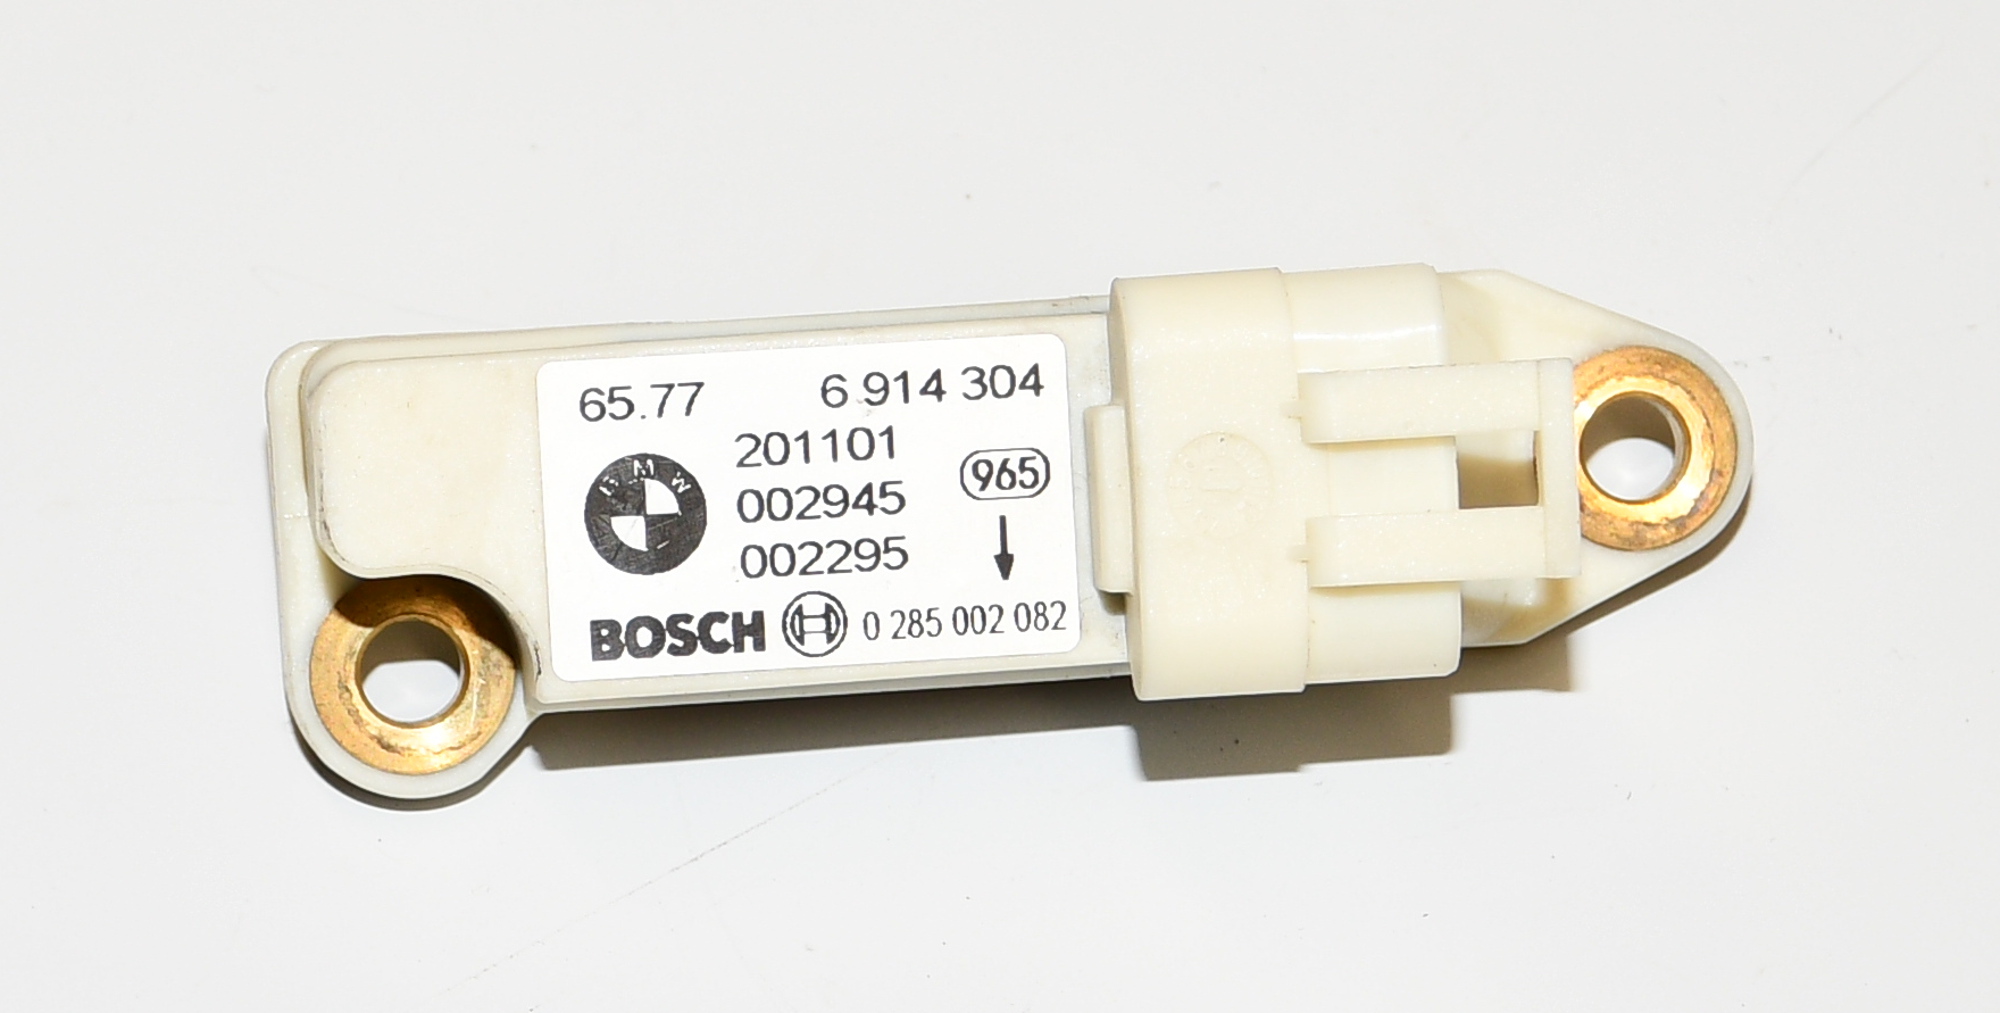 Querbeschleunigungsgeber Crashsensor  65776914304 Mini One Original Bosch 